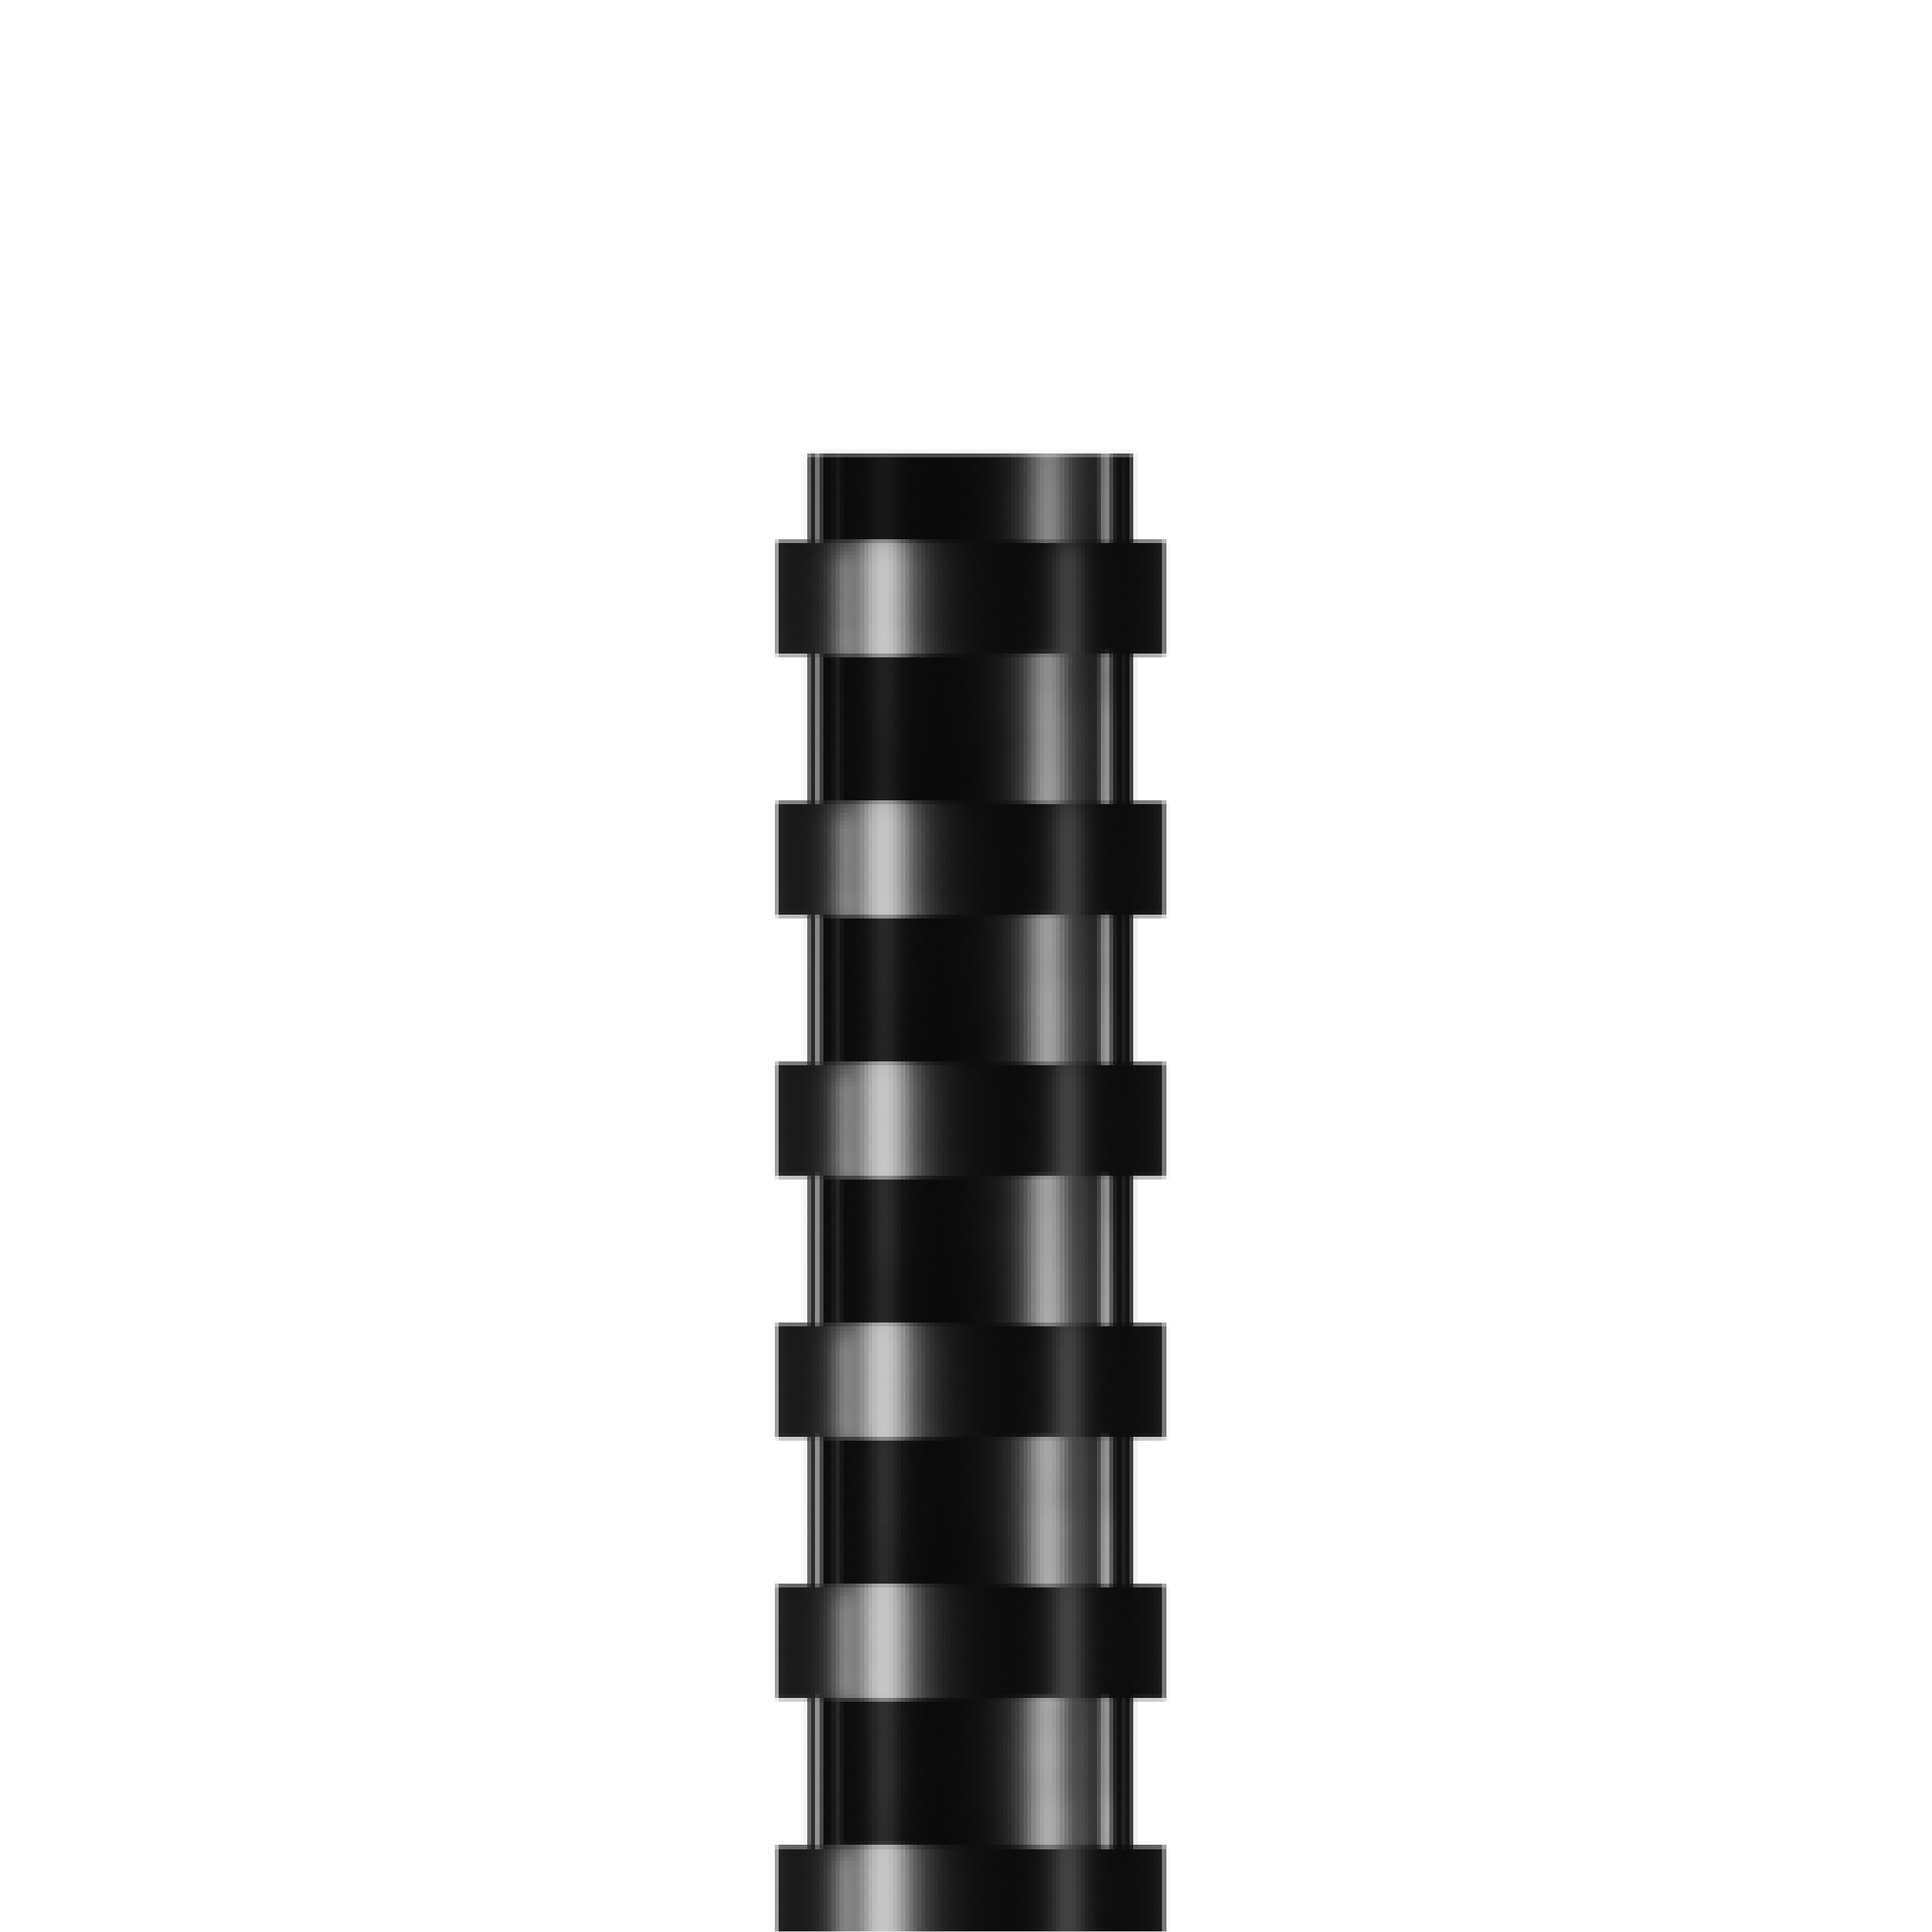 RAADO 20mm Plastic Spiral Binding Comb, Black